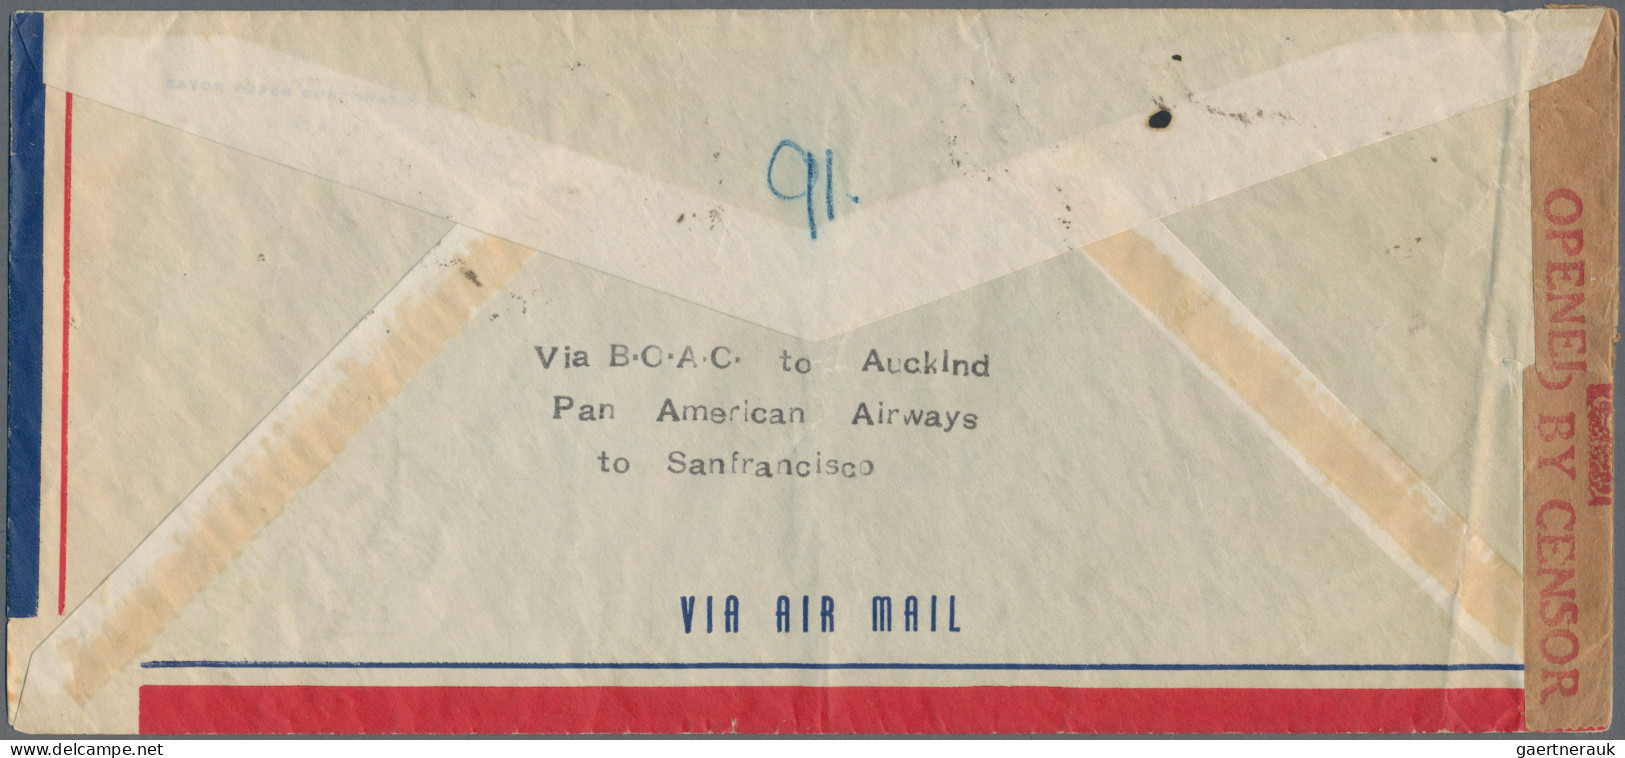 Bahrain: 1941 Censored Airmail Envelope Used From Bahrain To San Anselmo, Cal., - Bahrein (1965-...)